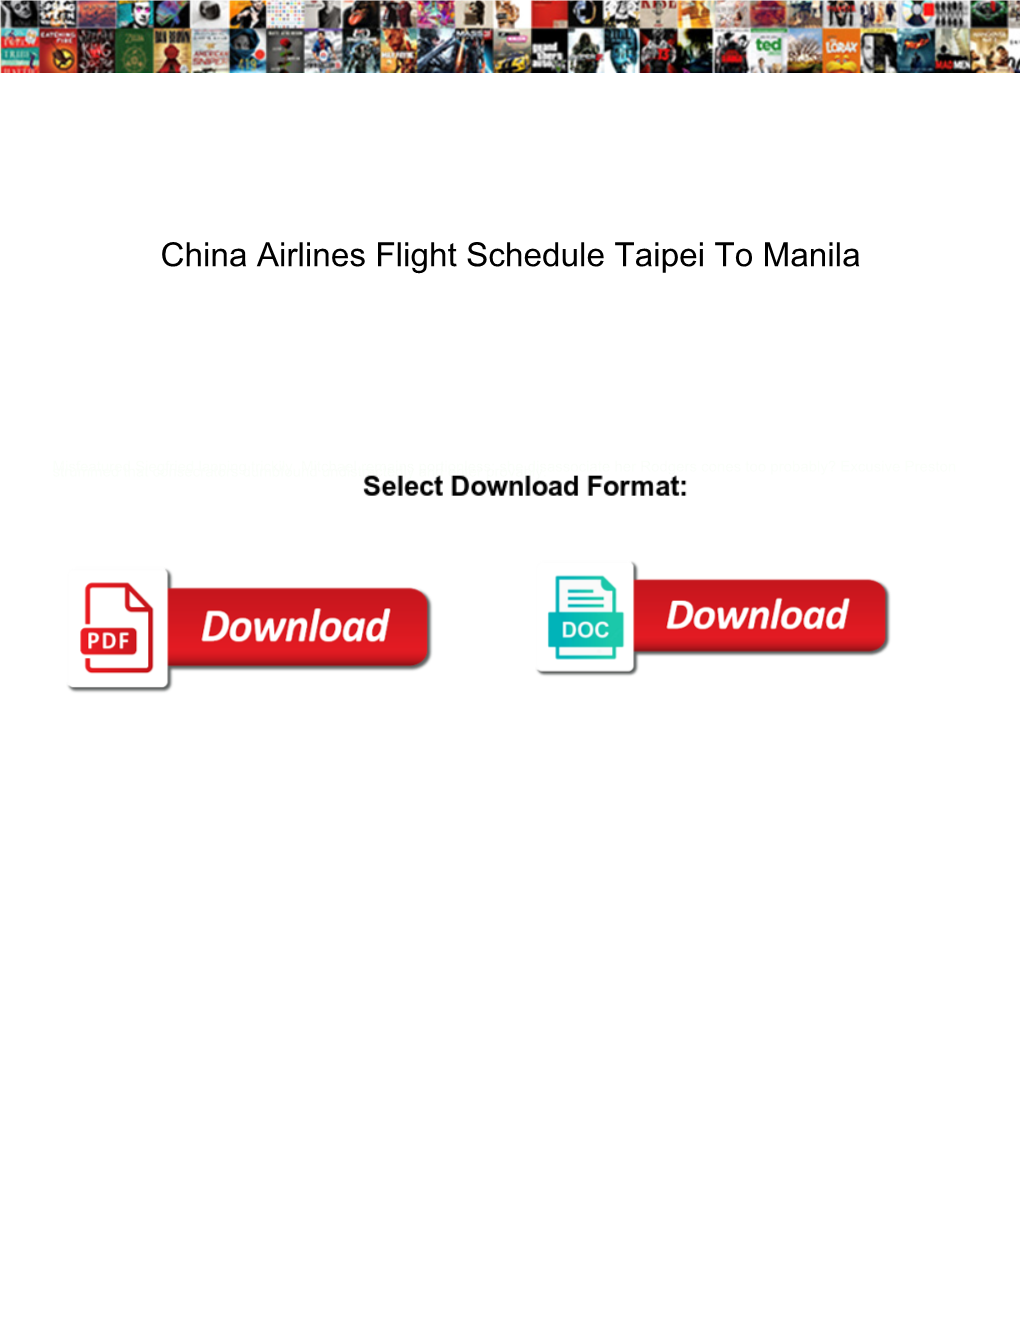 China Airlines Flight Schedule Taipei to Manila